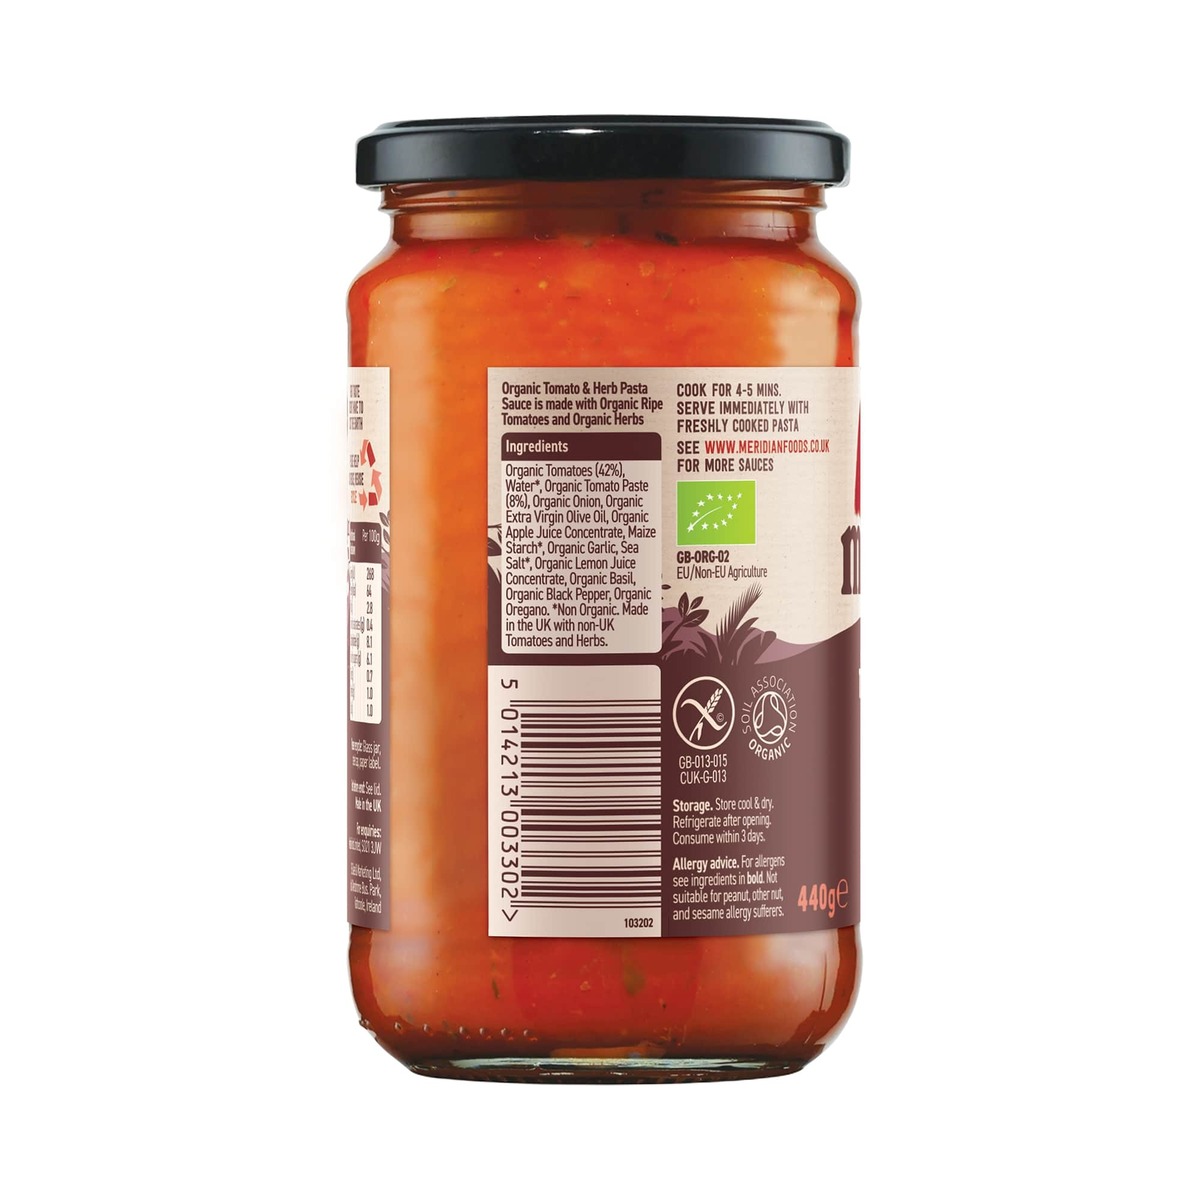 Meridian Organic Pasta Sauce Tomato & Herb 440 g